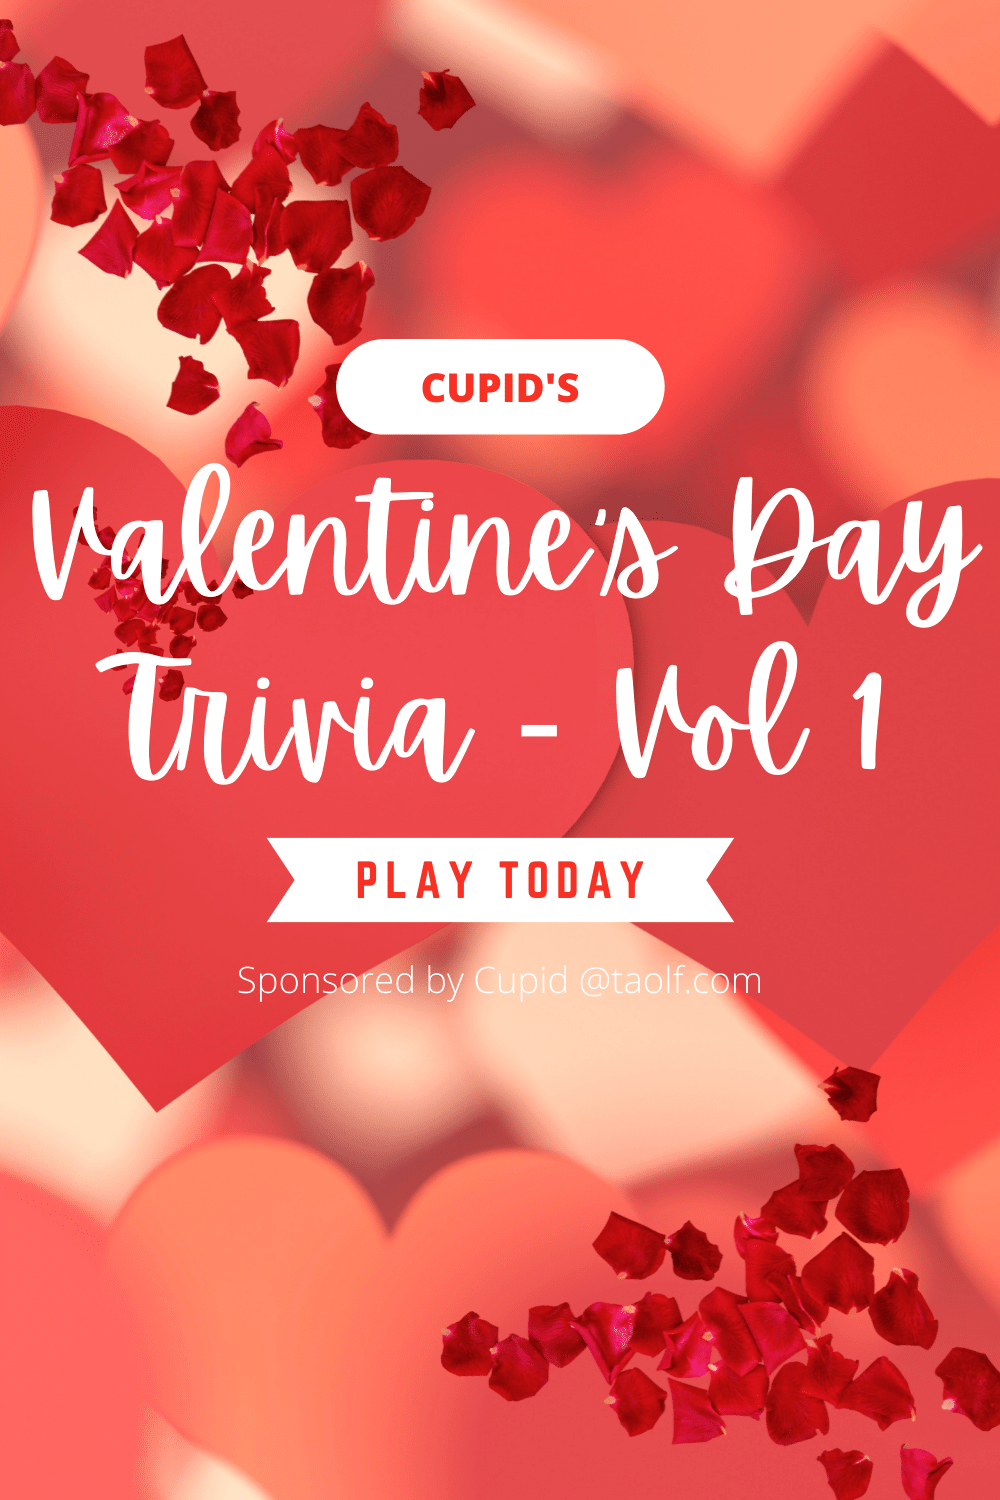 Valentine's Day Trivia - Vol 1